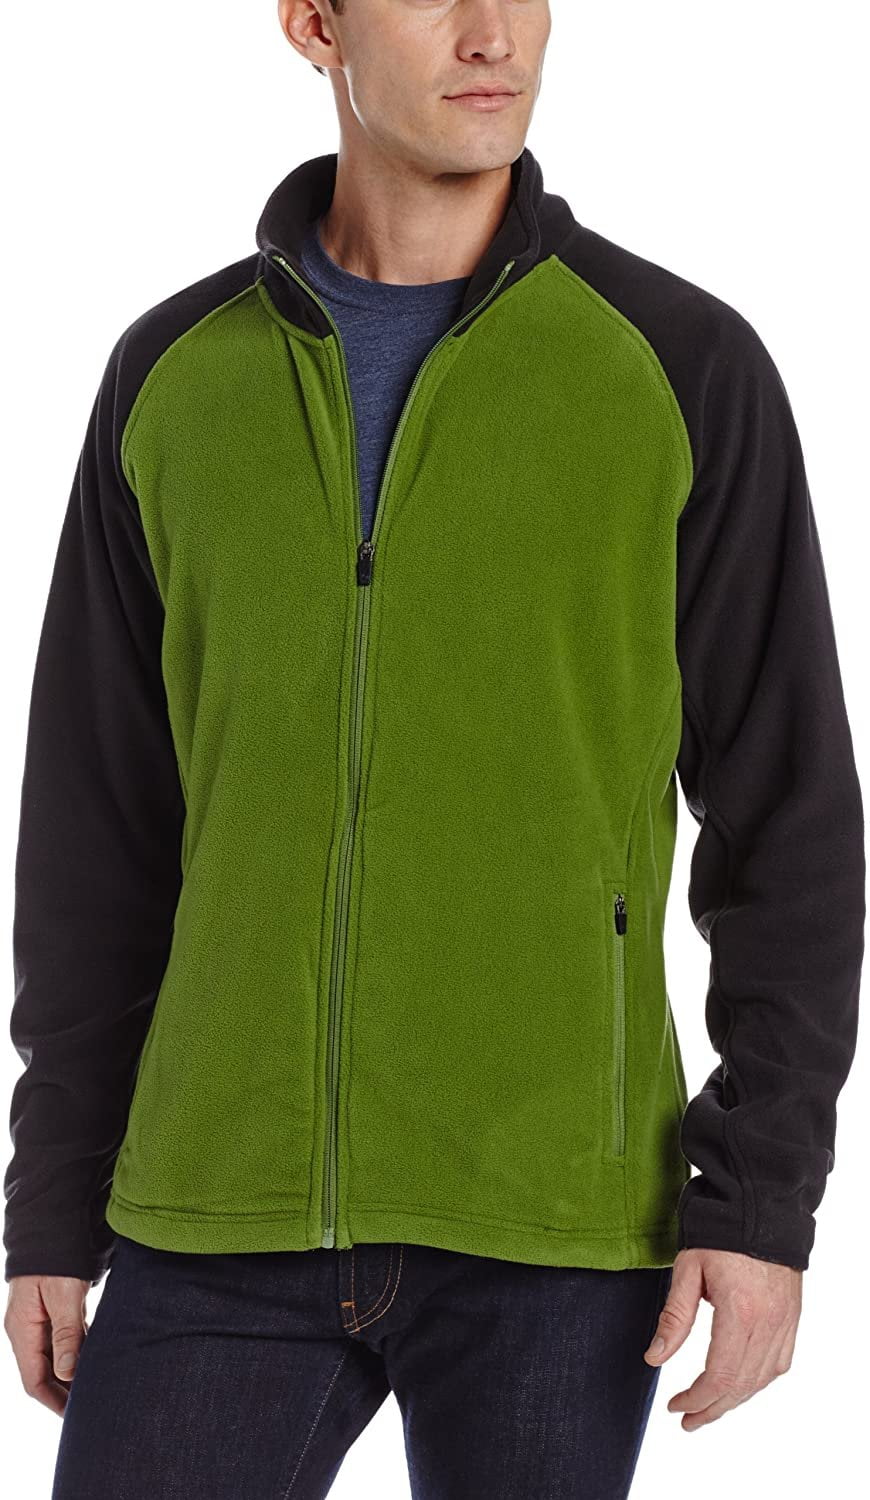 Colorado Clothing Men's Steamboat Jacket, Kale/Black, 3X-Large - Walmart.com